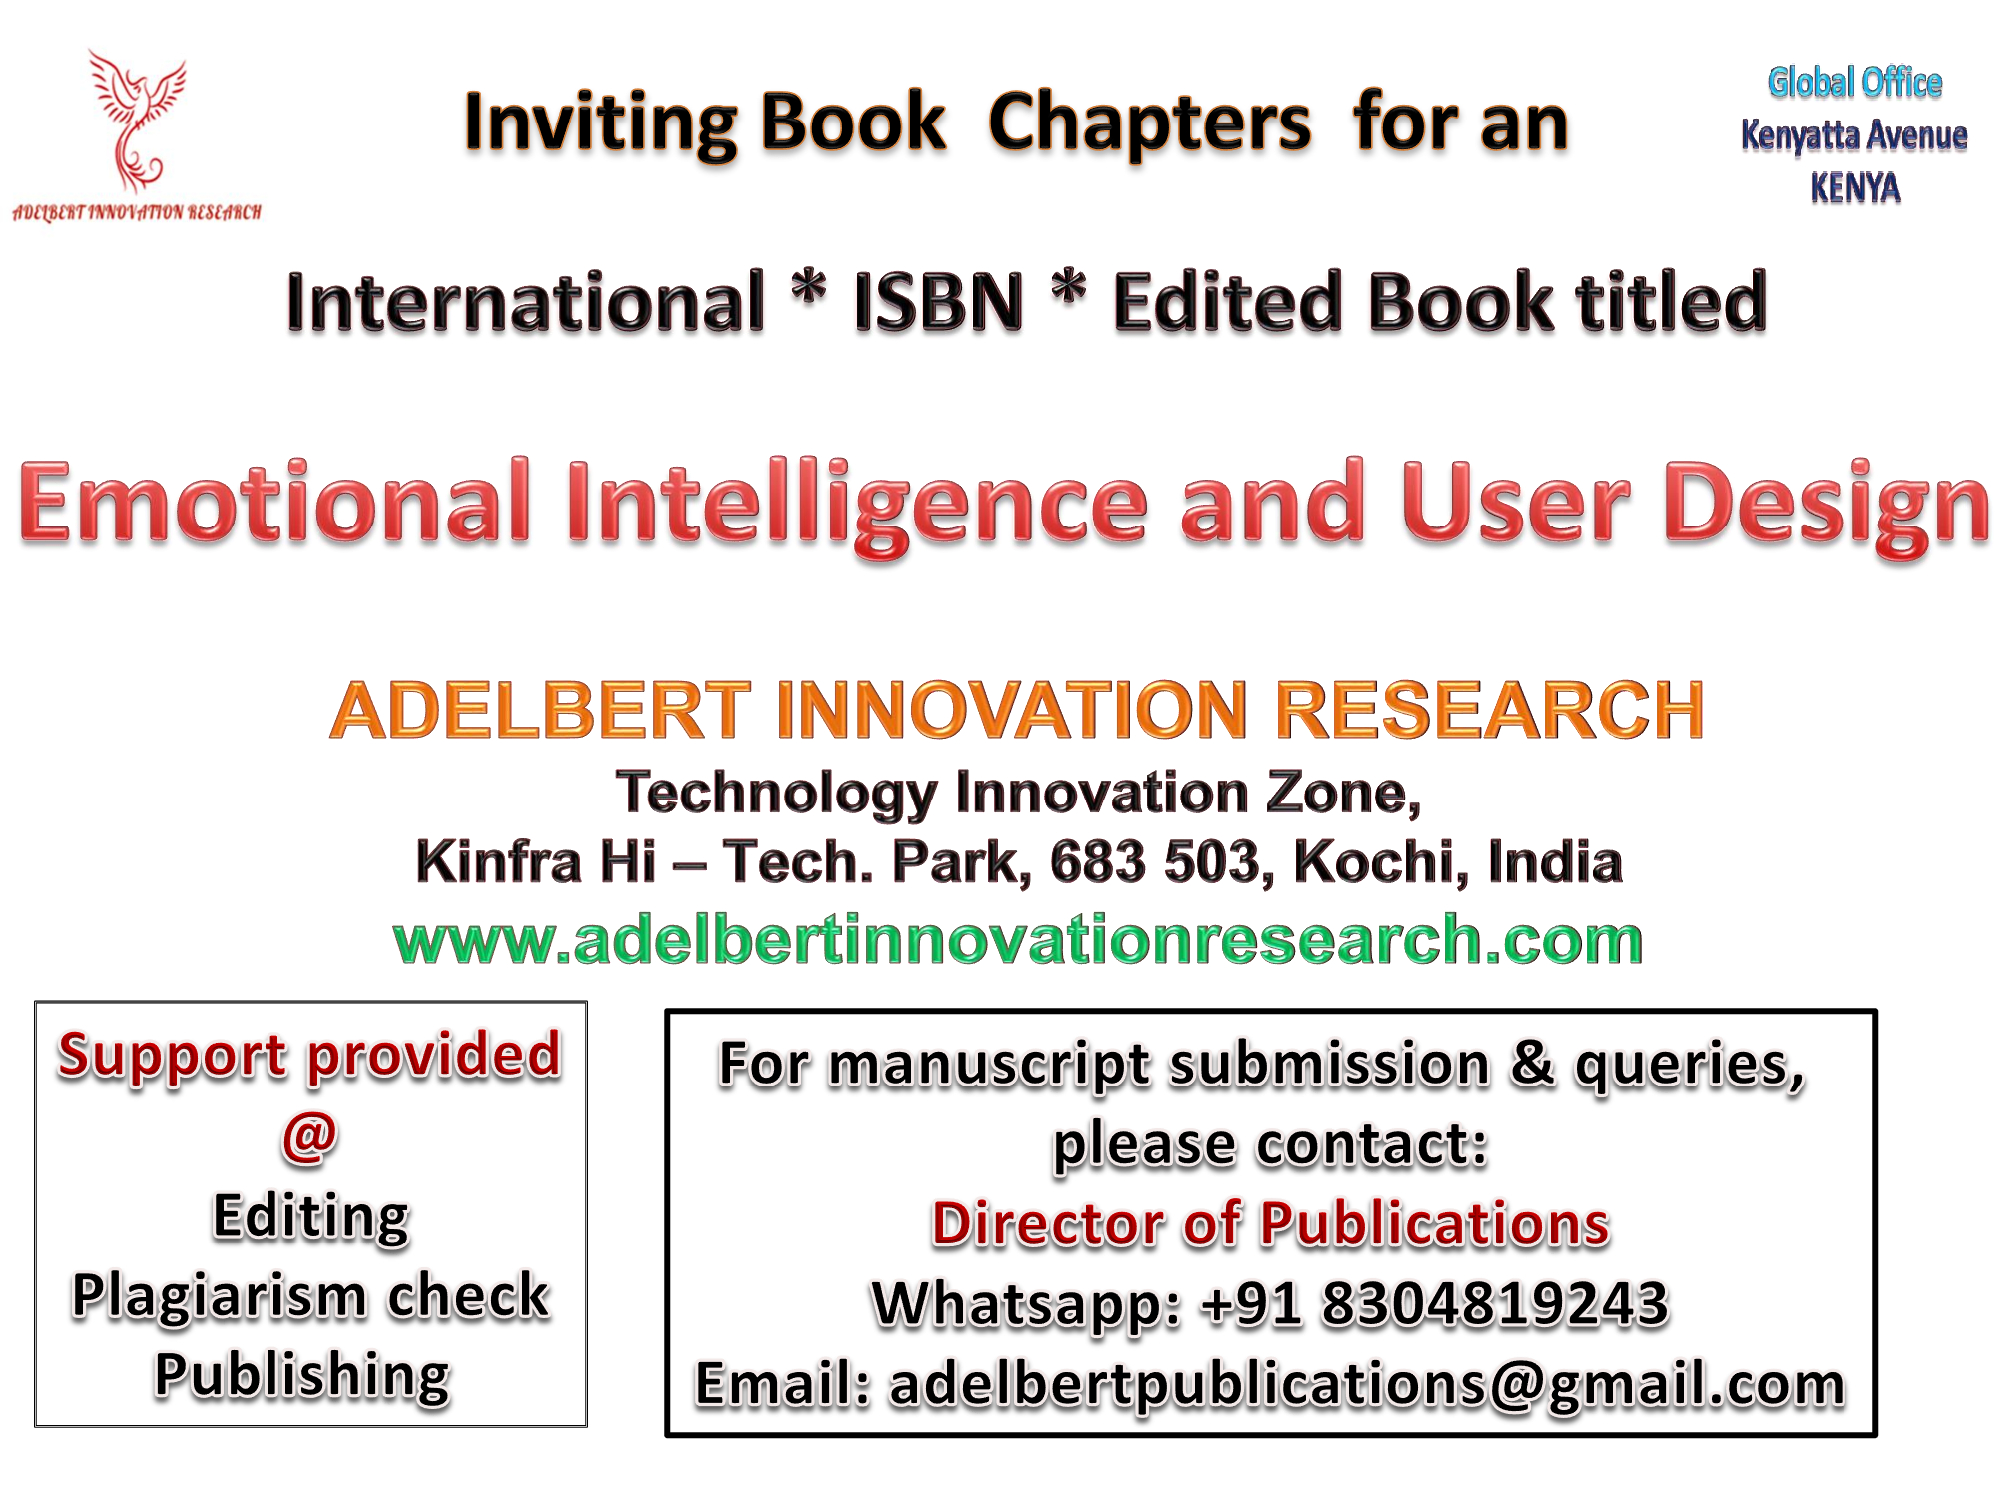 Adelbert ISBN Emotional Intelligence and User Design